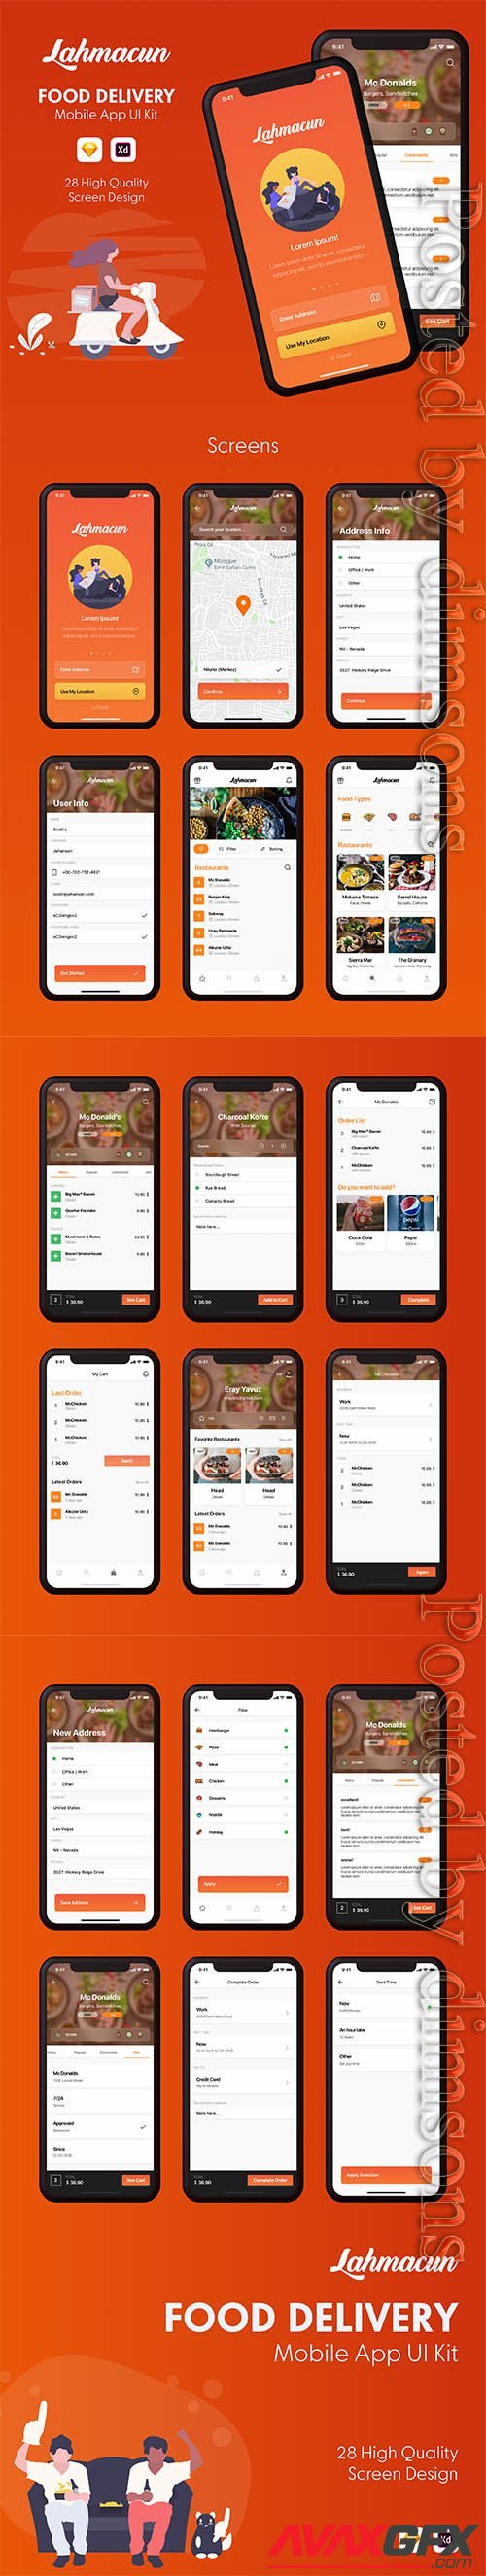 Lahmacun - Food Delivery Mobile App UI Kit UI8